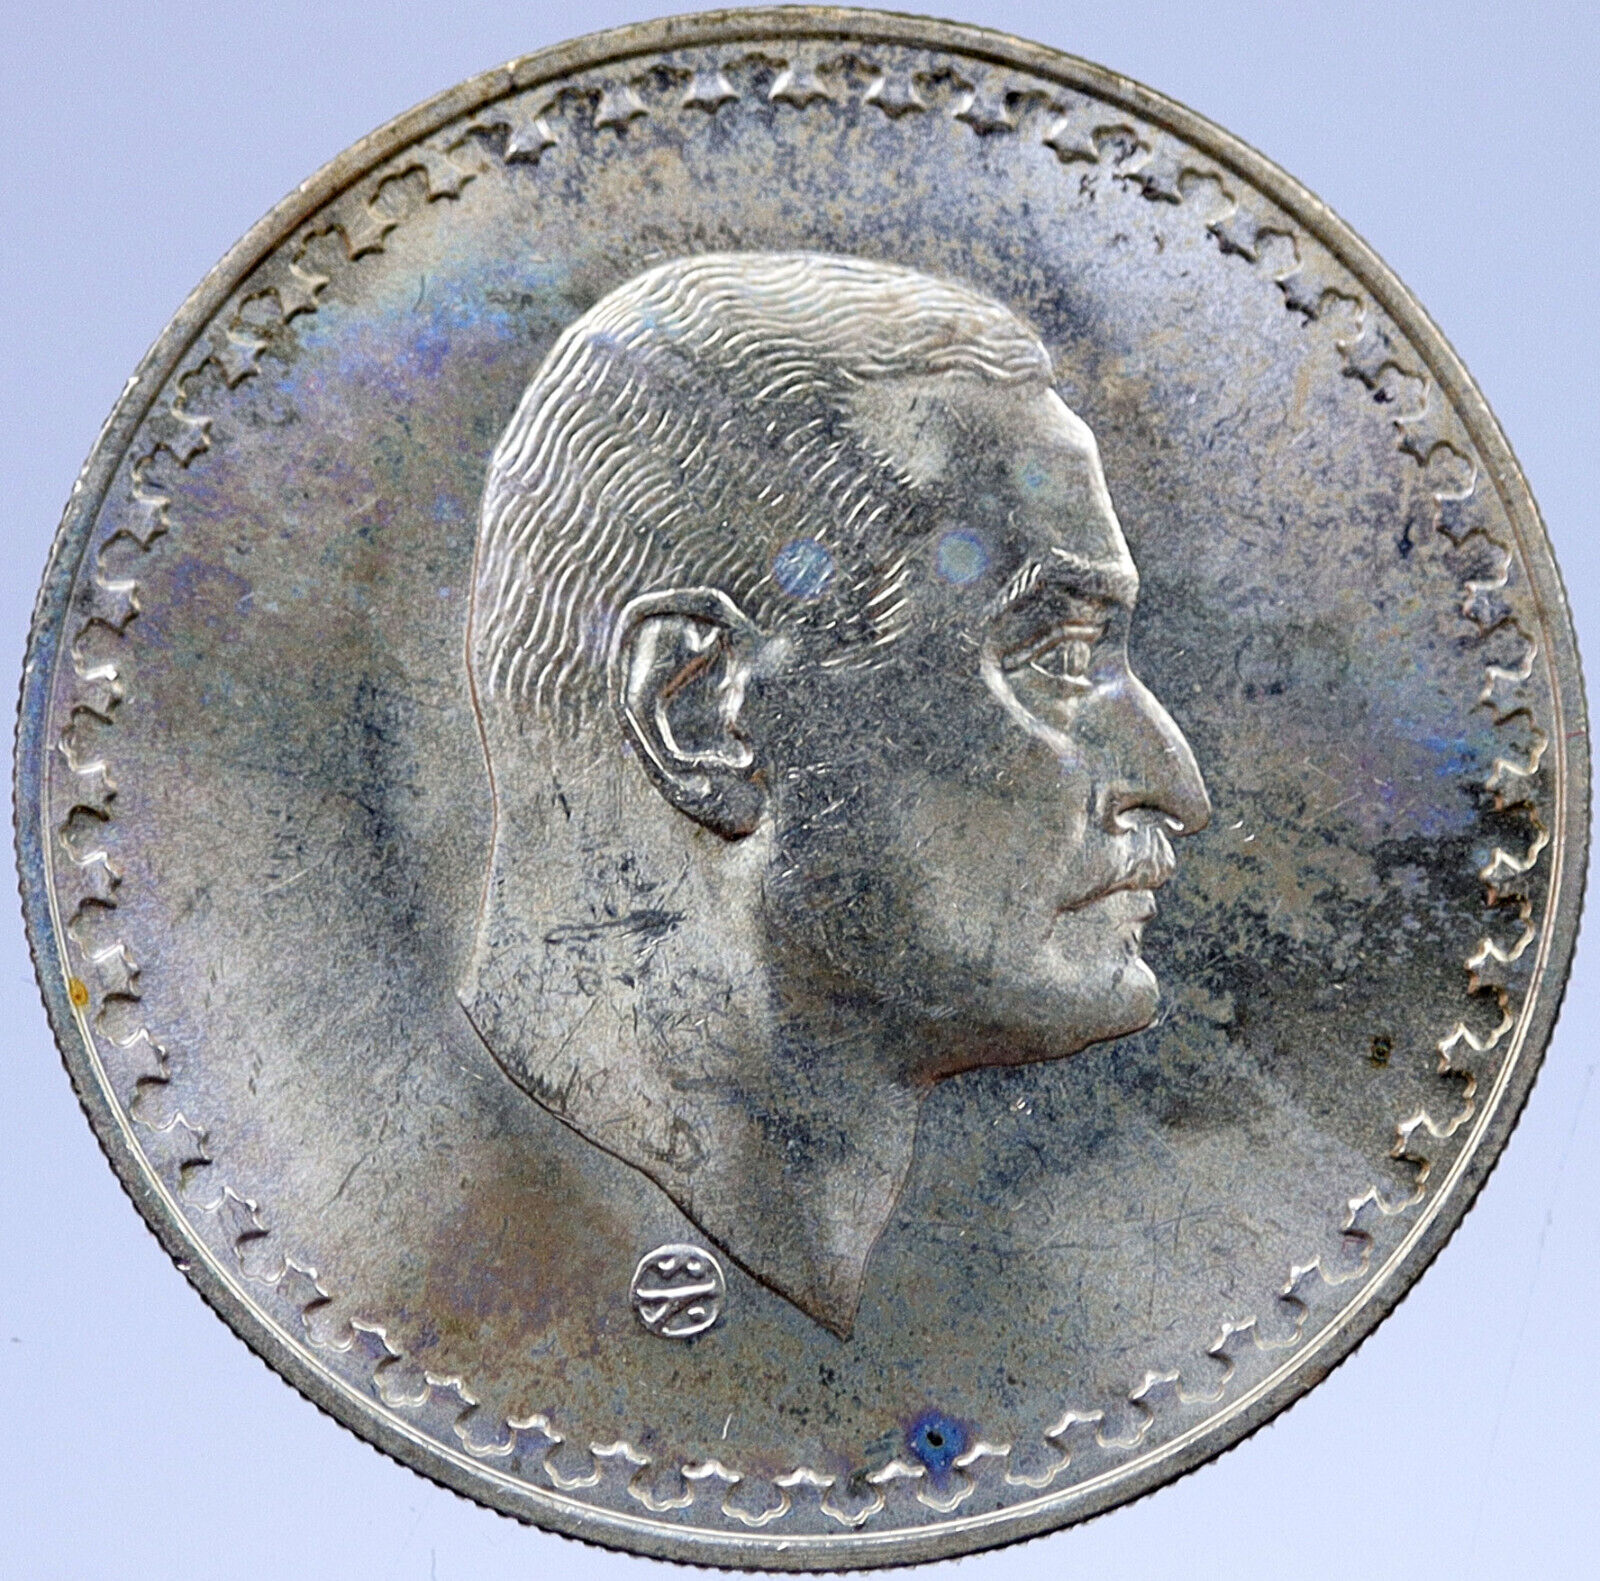 1970 EGYPT LARGE Silver 1 Pound President Nasser Hussein Genuine Coin i119417